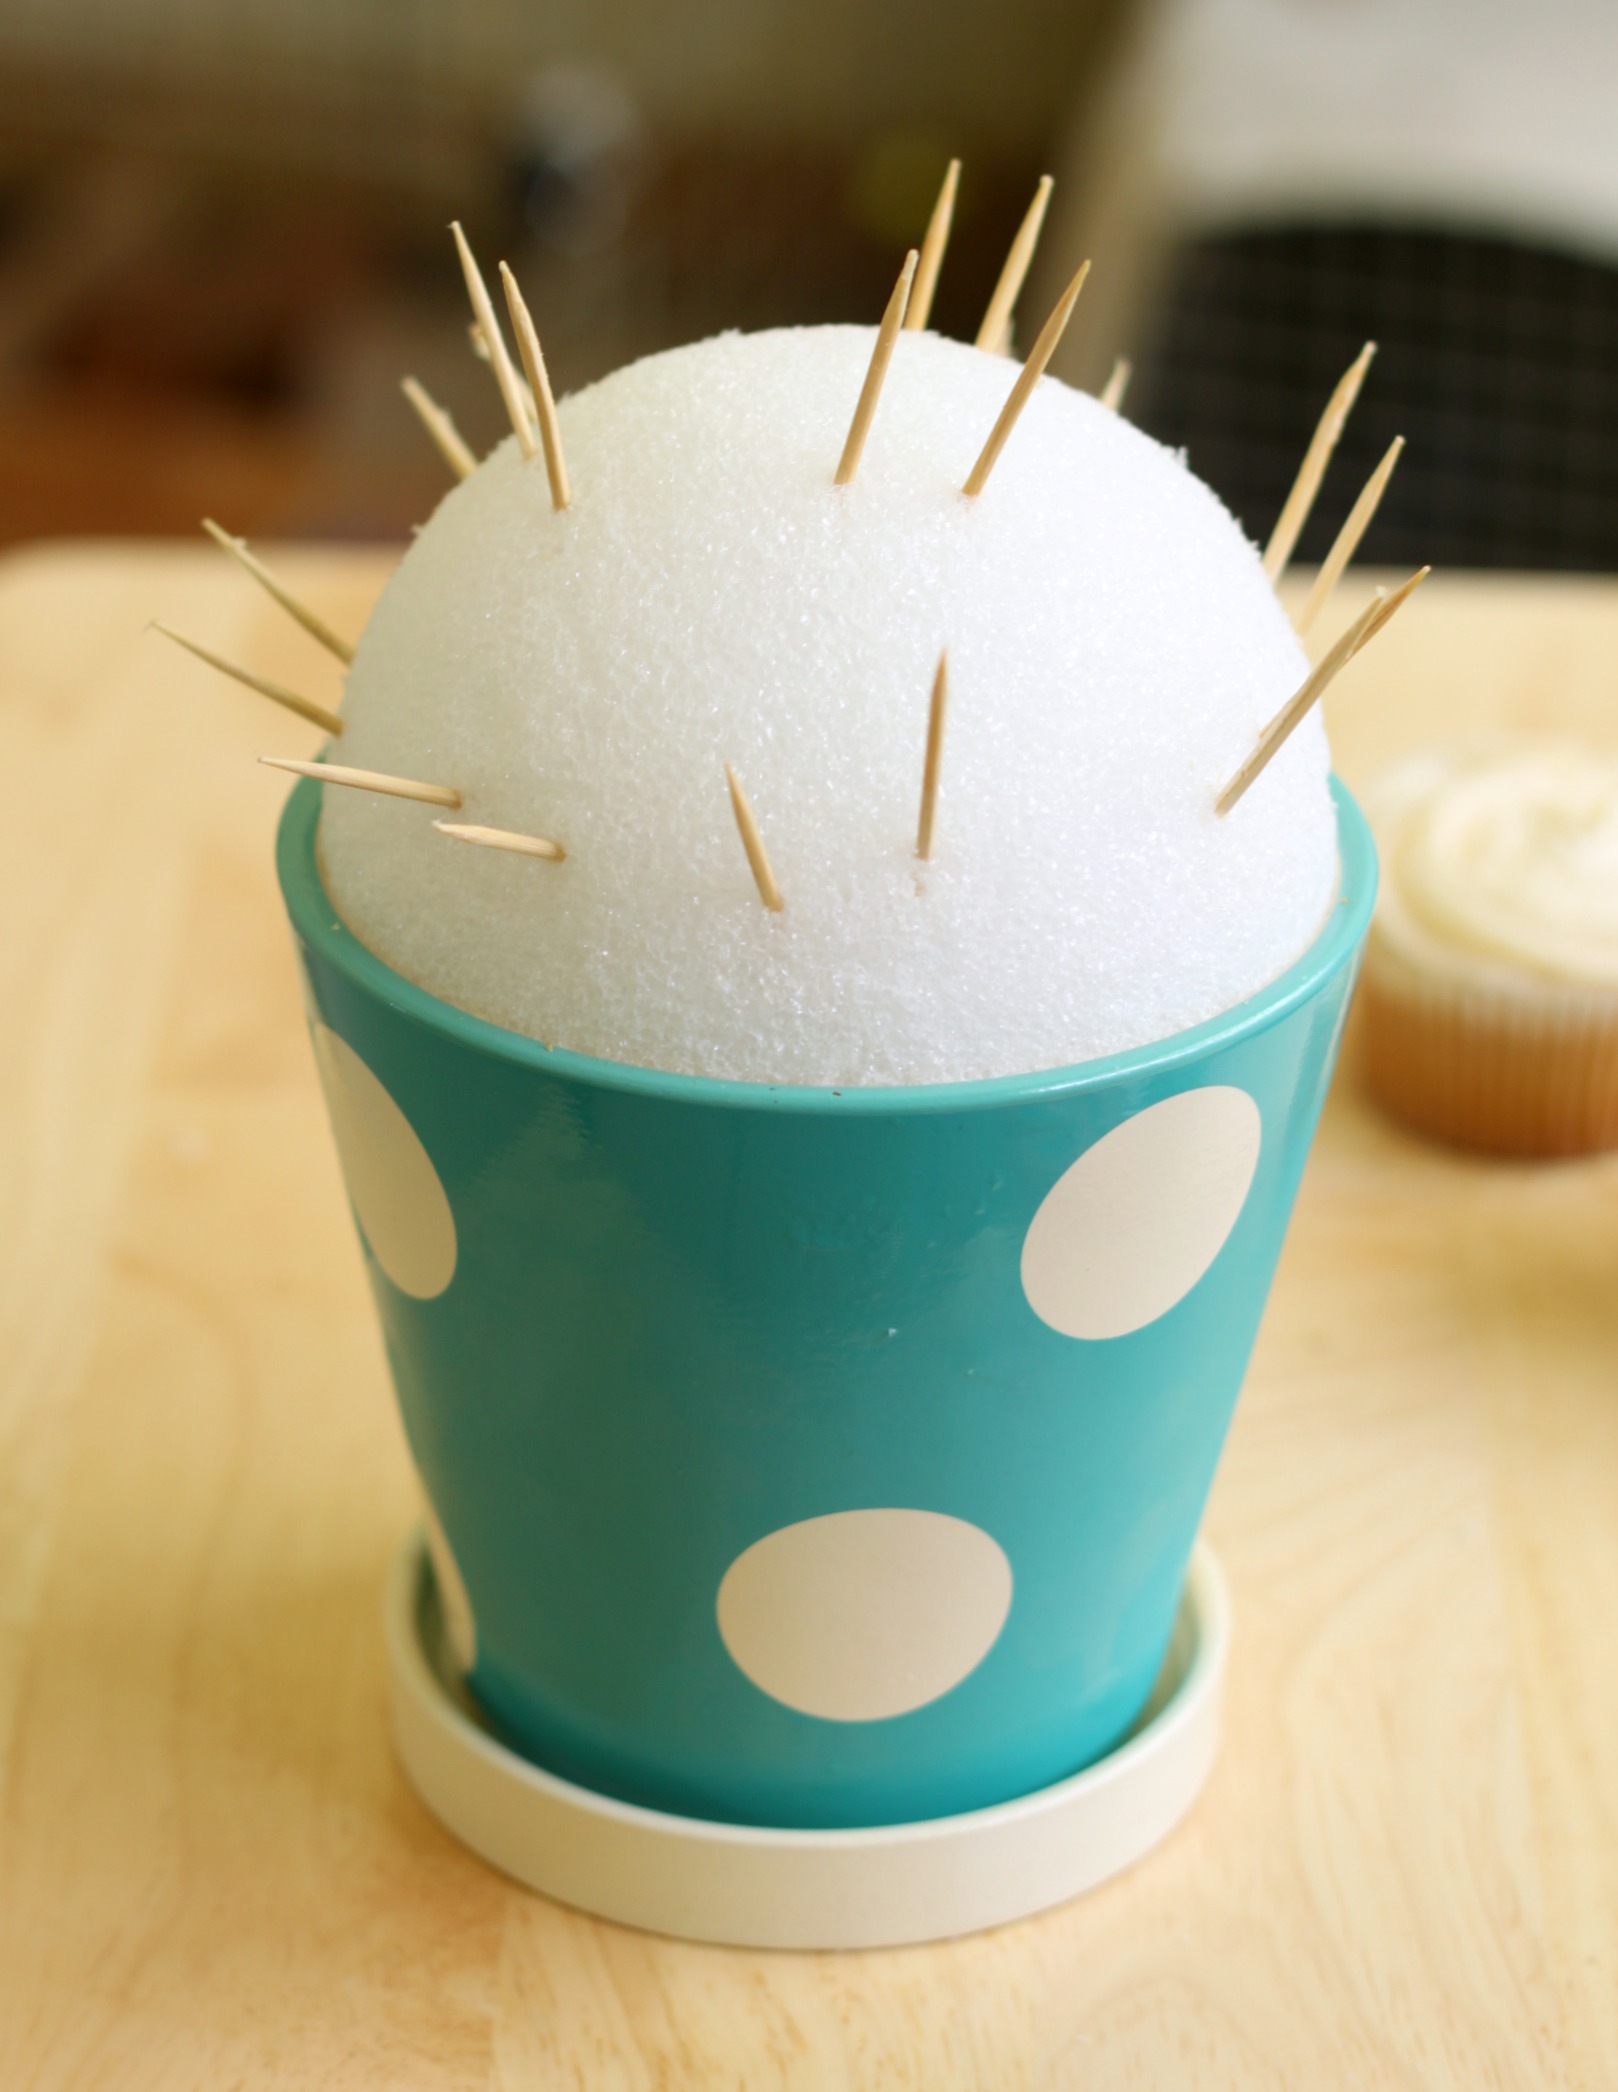 Put toothpicks in styrofoam ball